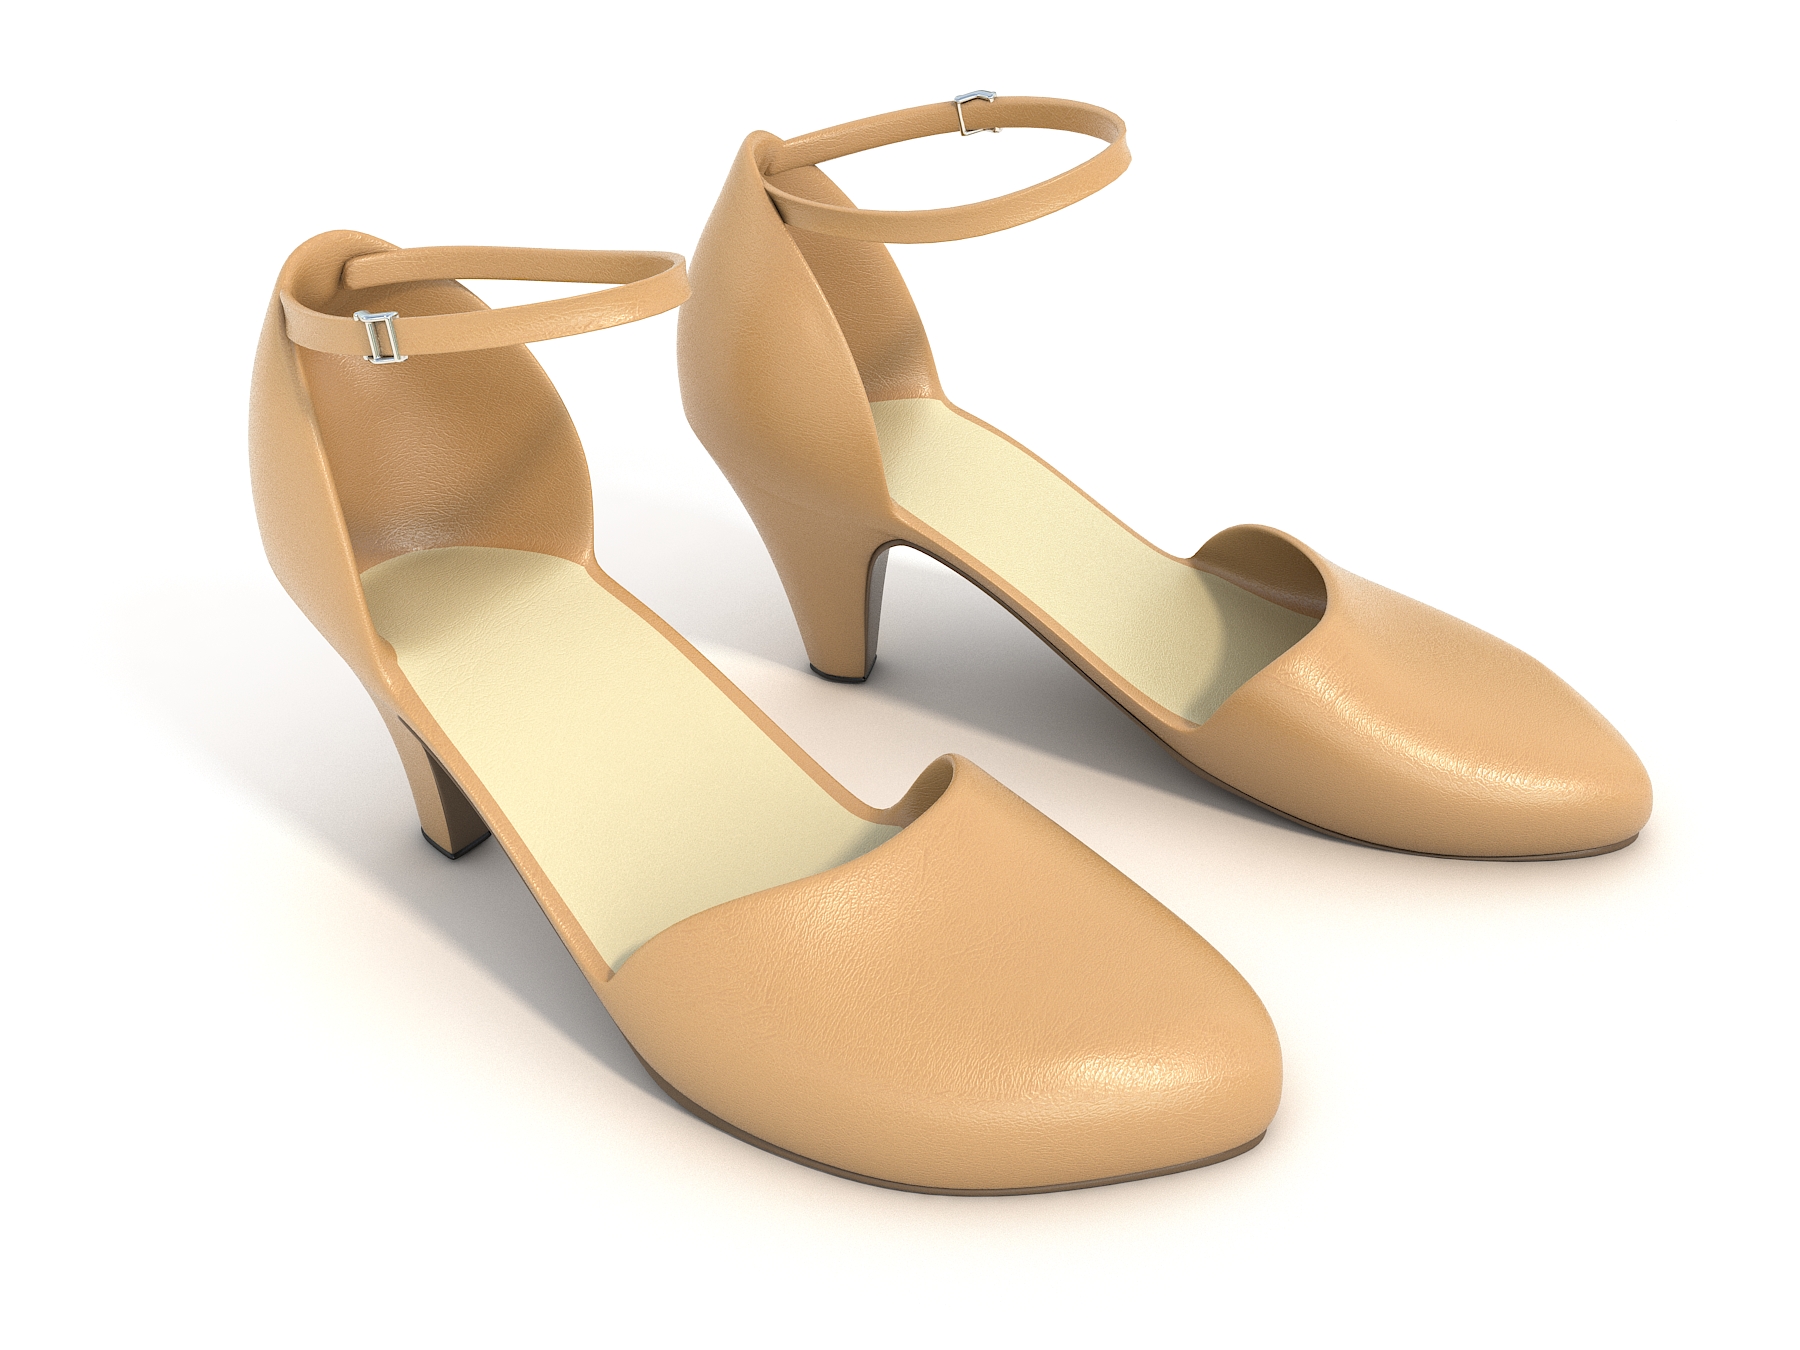 Women Shoes 5 by nhattuankts | 3DOcean